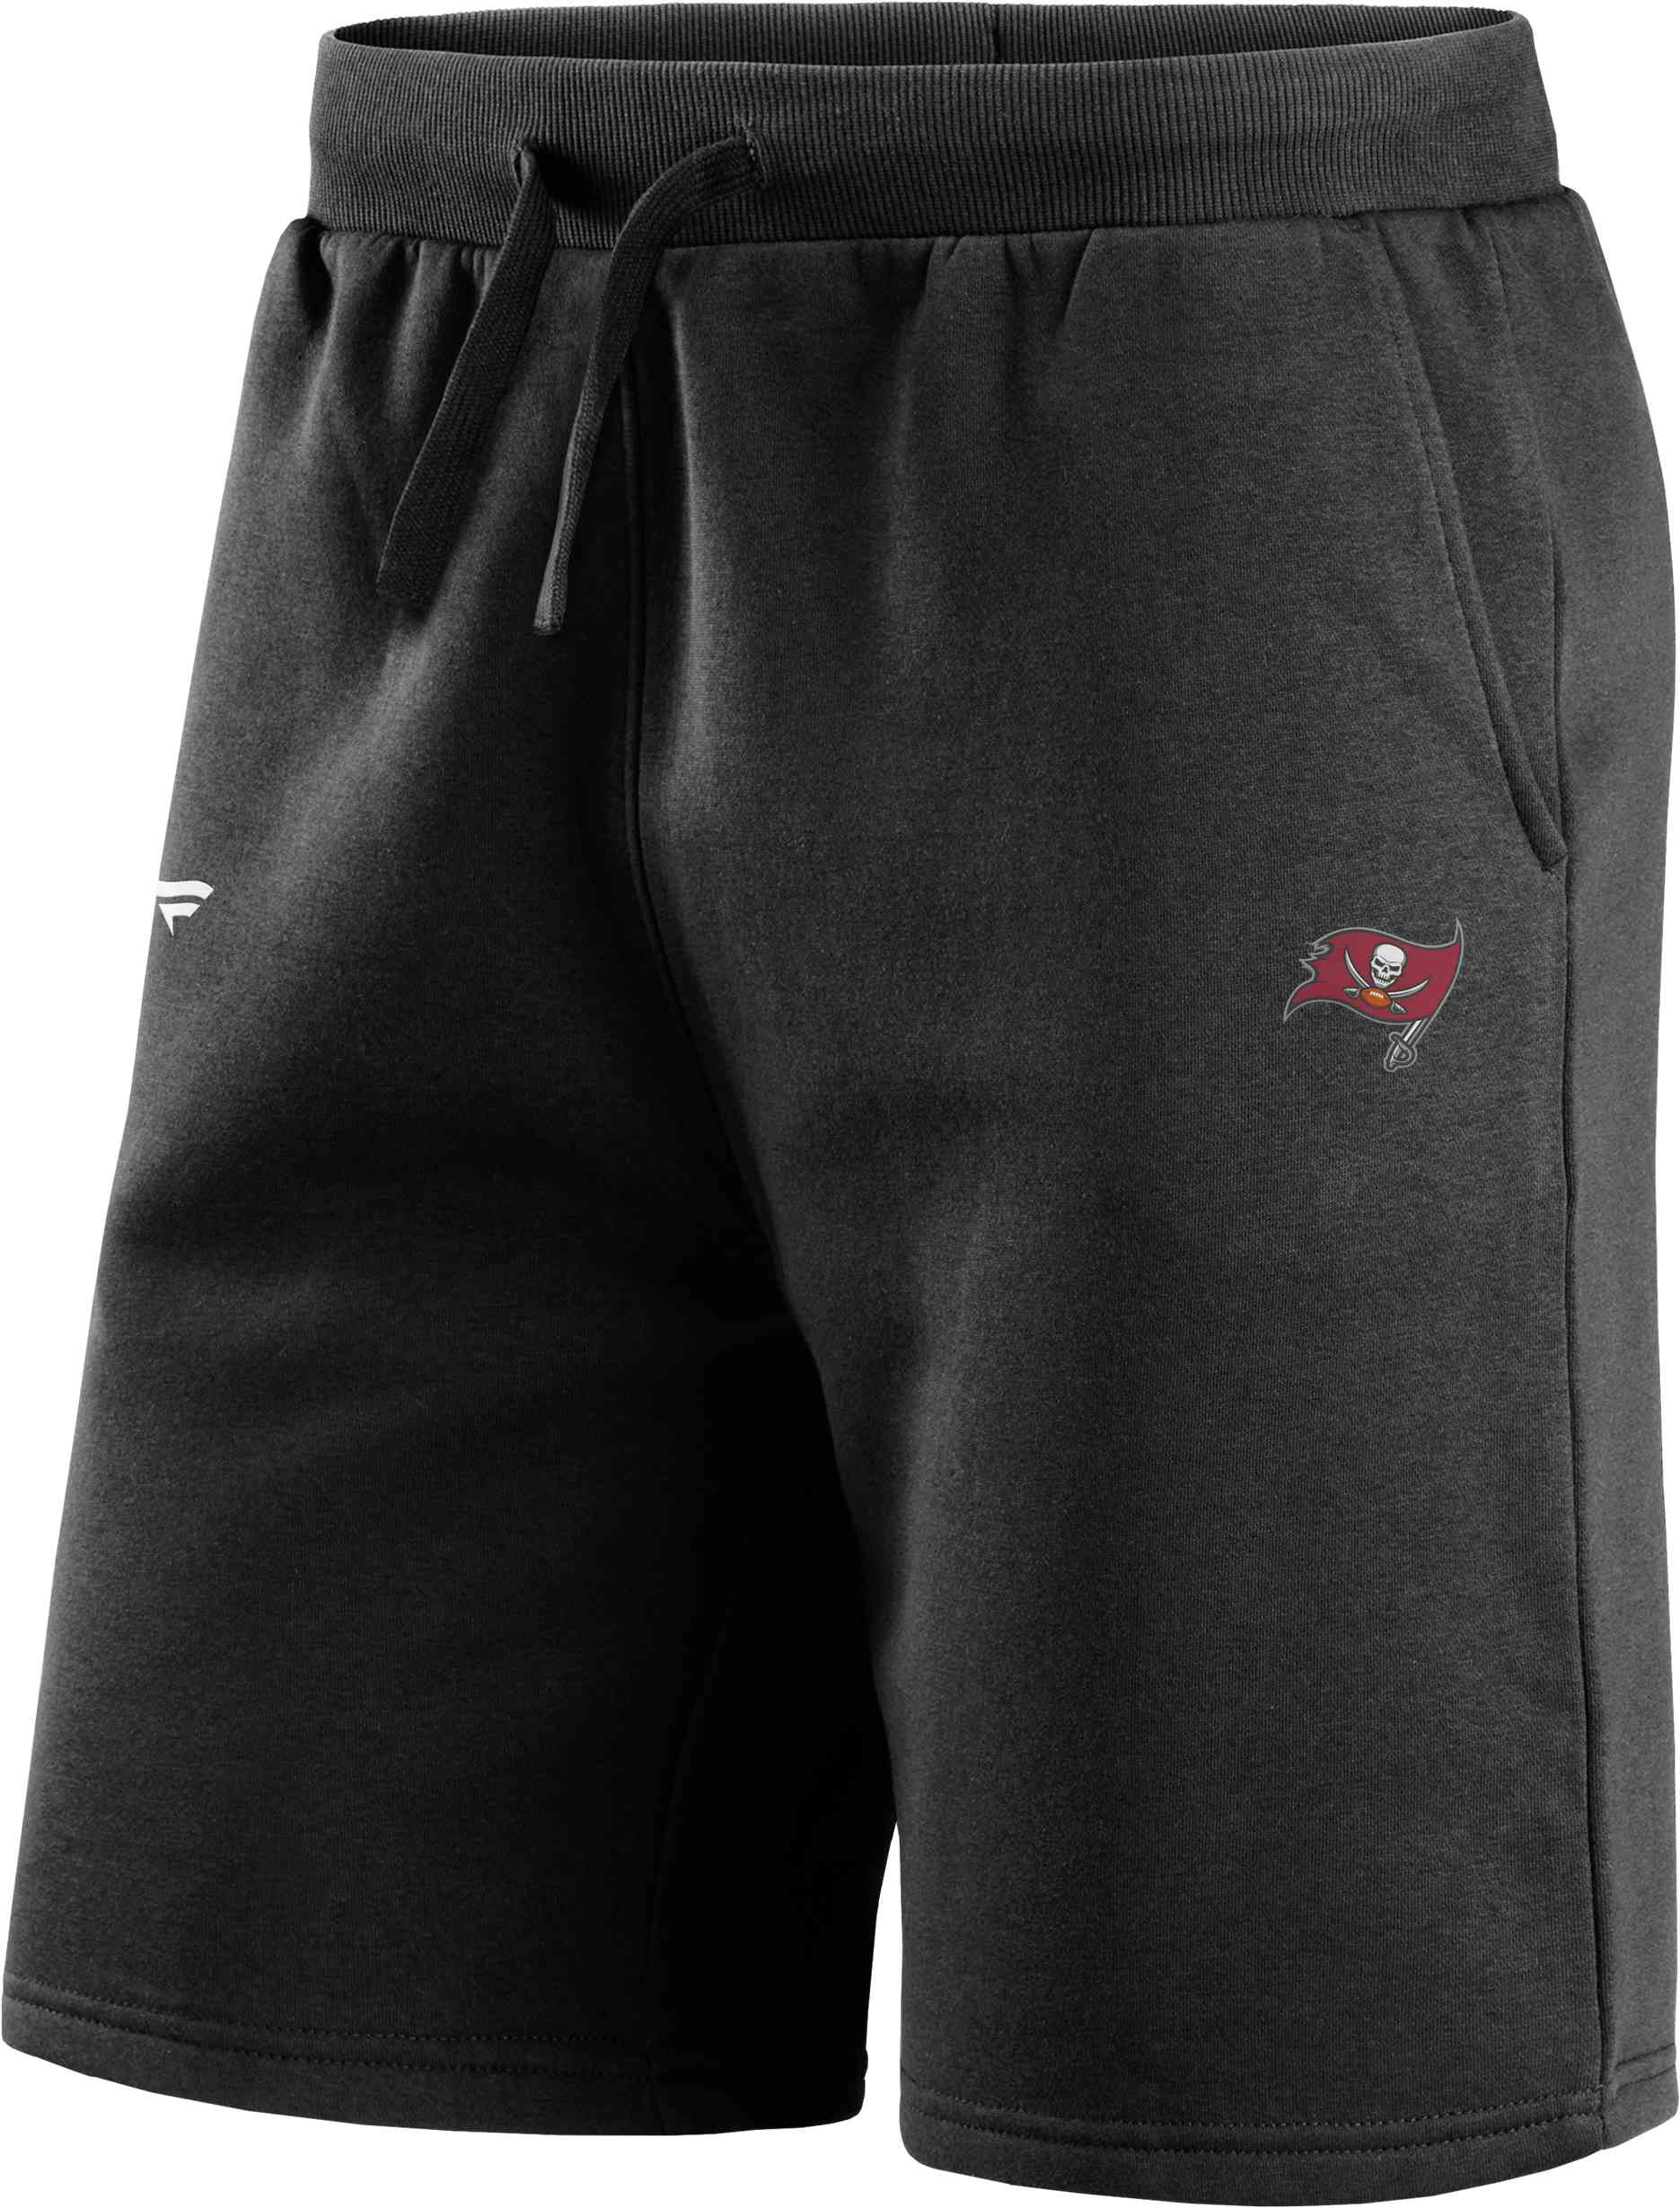 Fanatics - NFL Tampa Bay Buccaneers Primary Logo Fleece Shorts